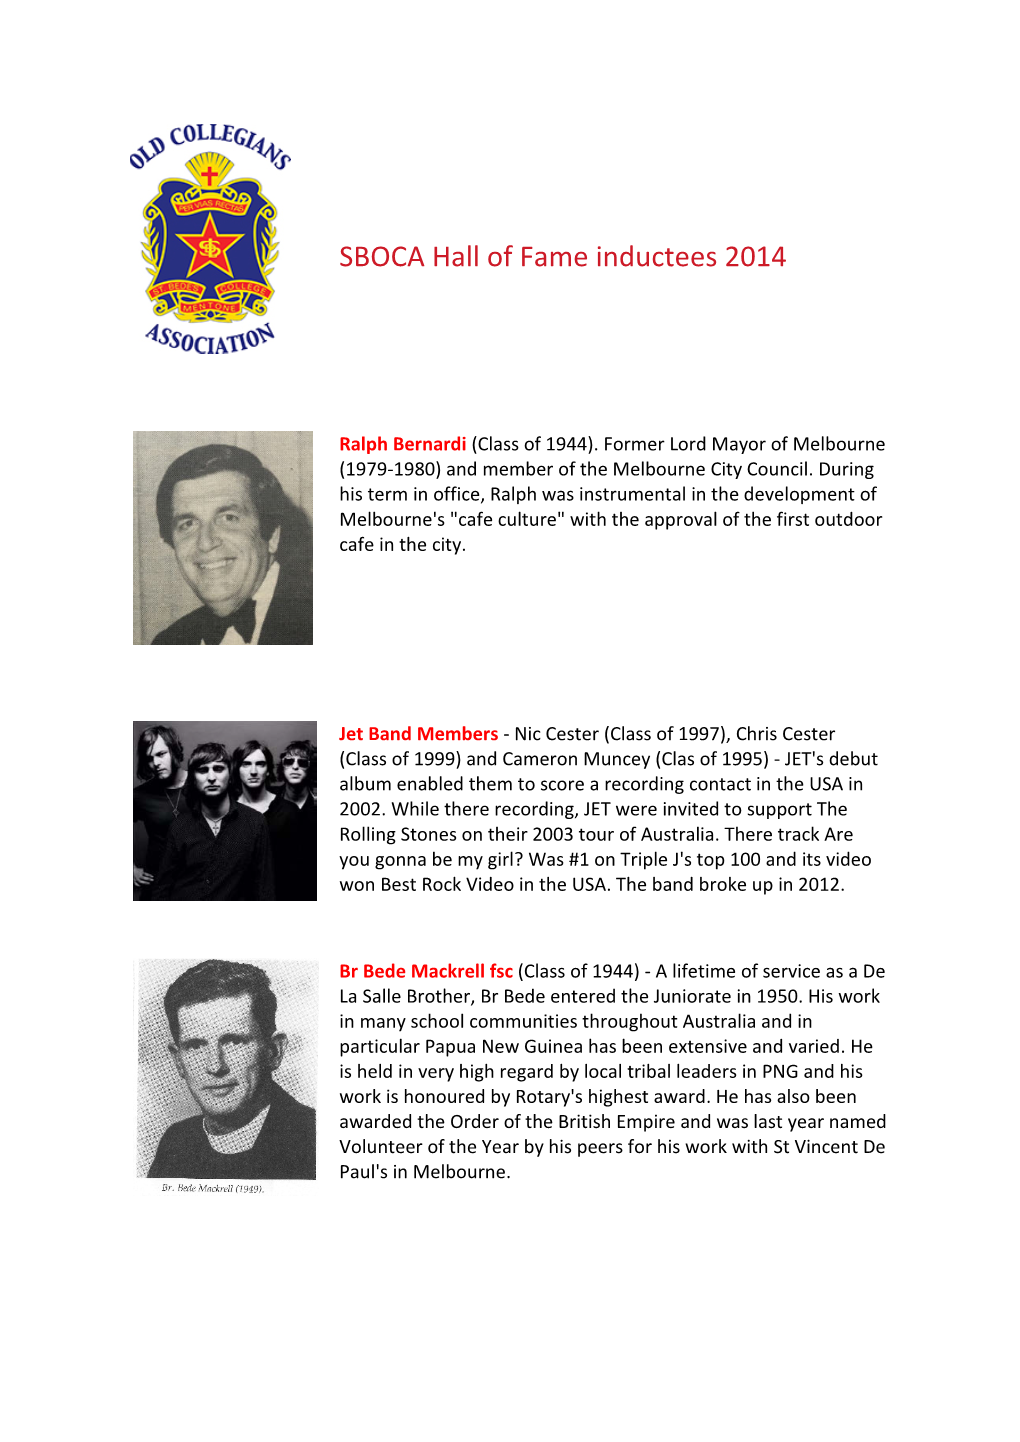 SBOCA Hall of Fame Inductees 2014